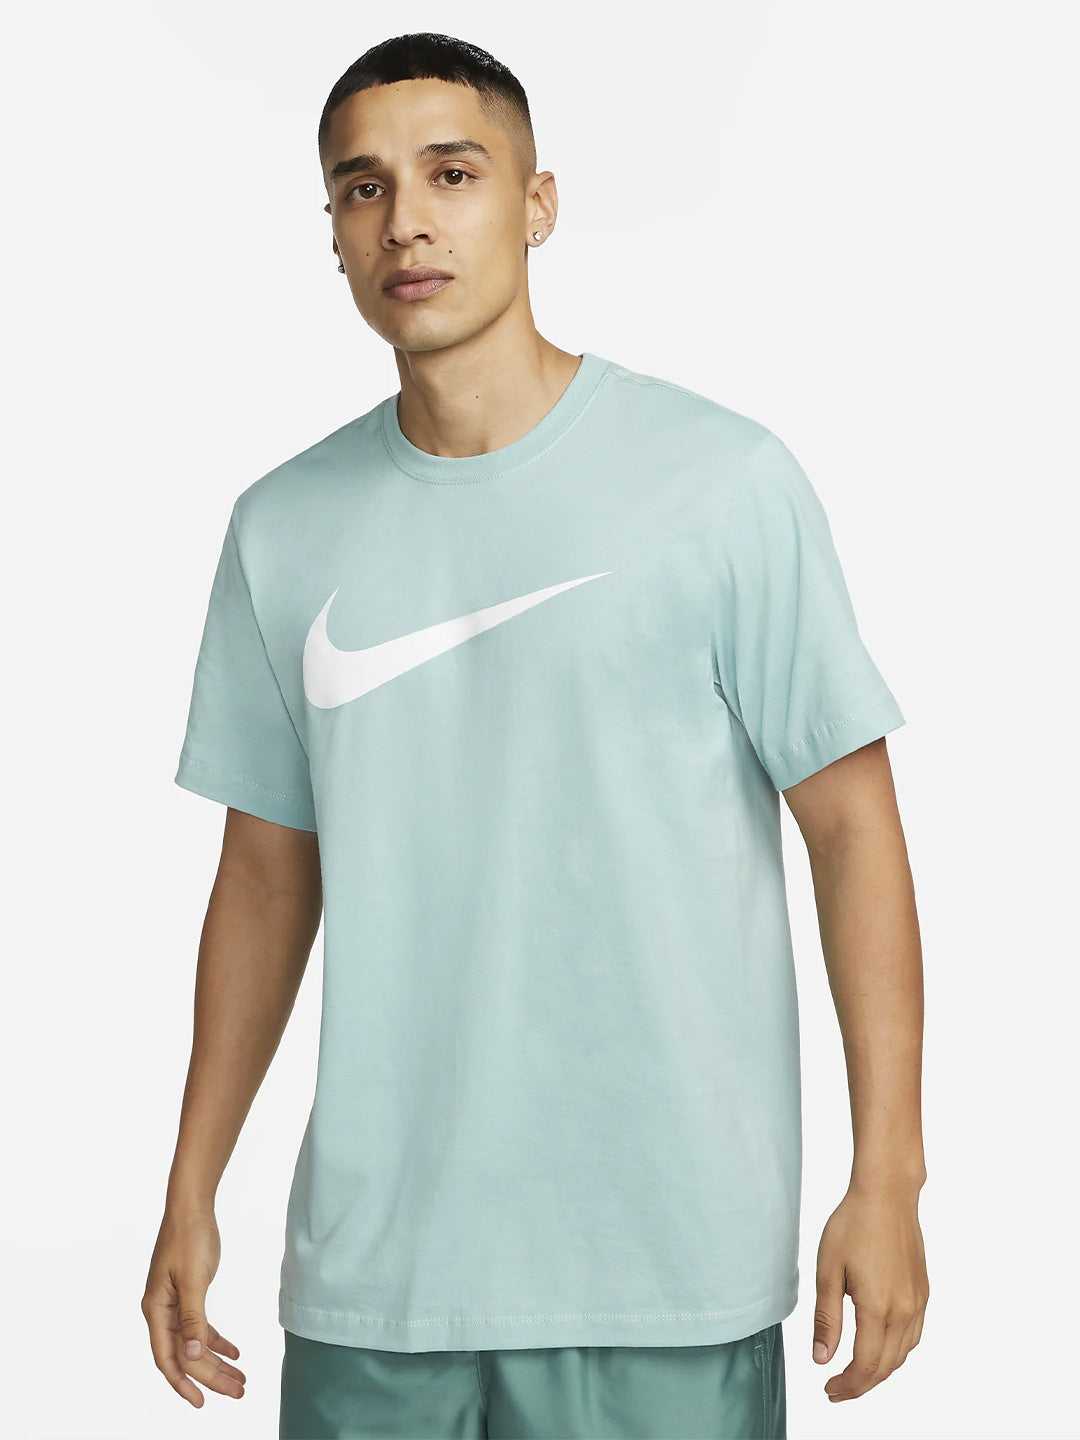 Nike t-shirt verde basic con logo centrale in contrasto